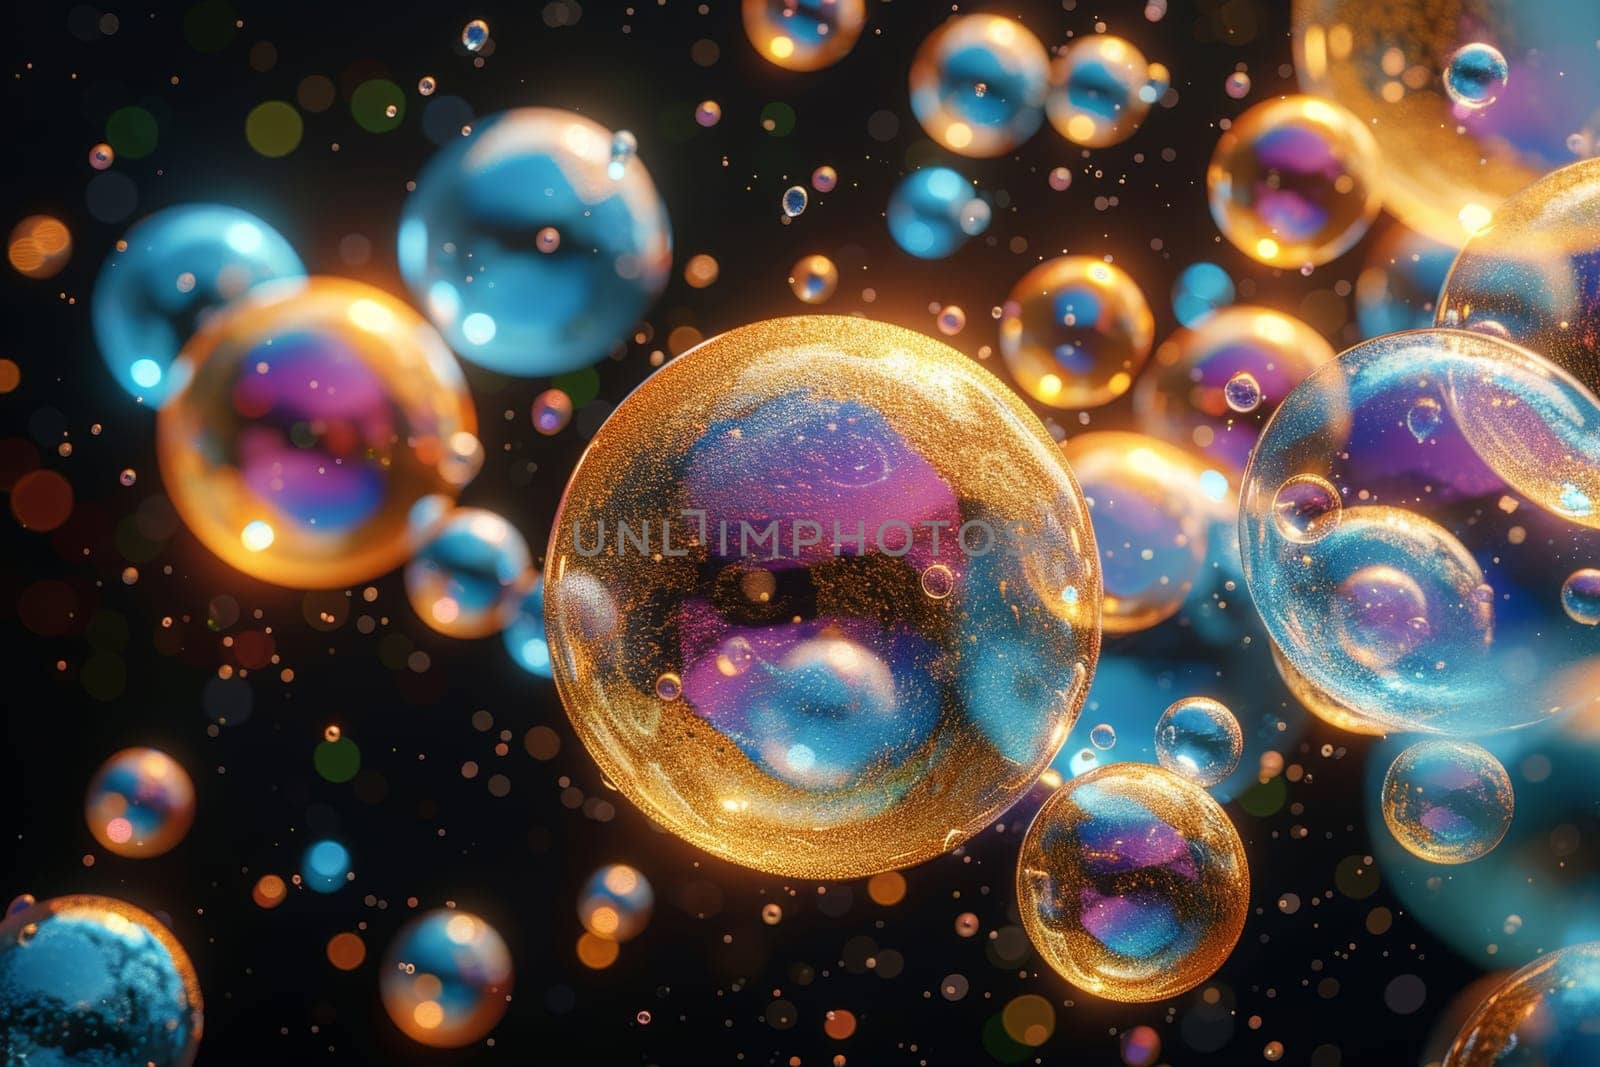 Rainbow soap bubbles in sunlight on a dark background.